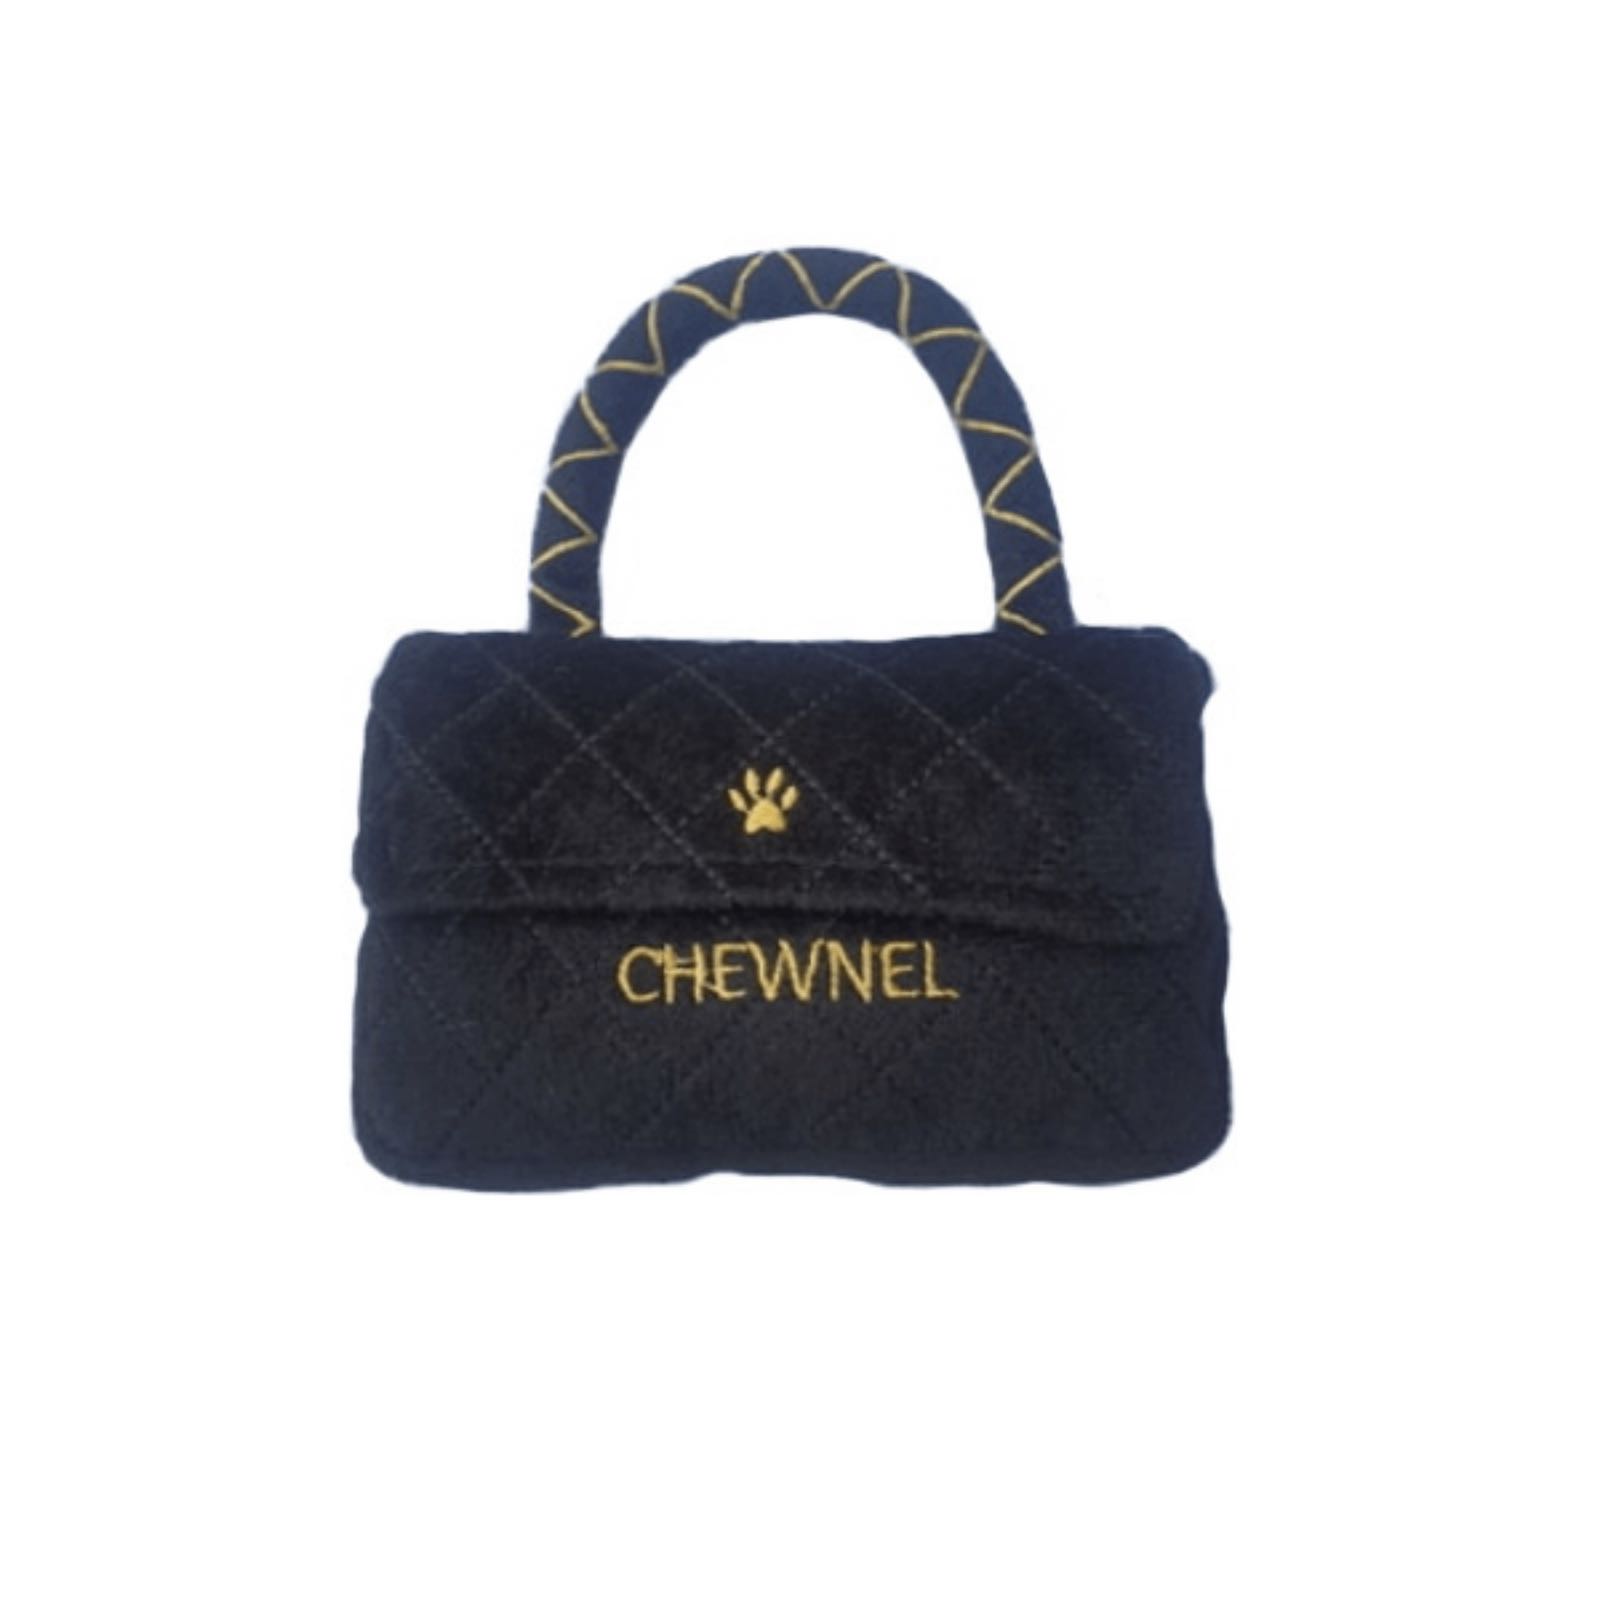 Chewnel bag